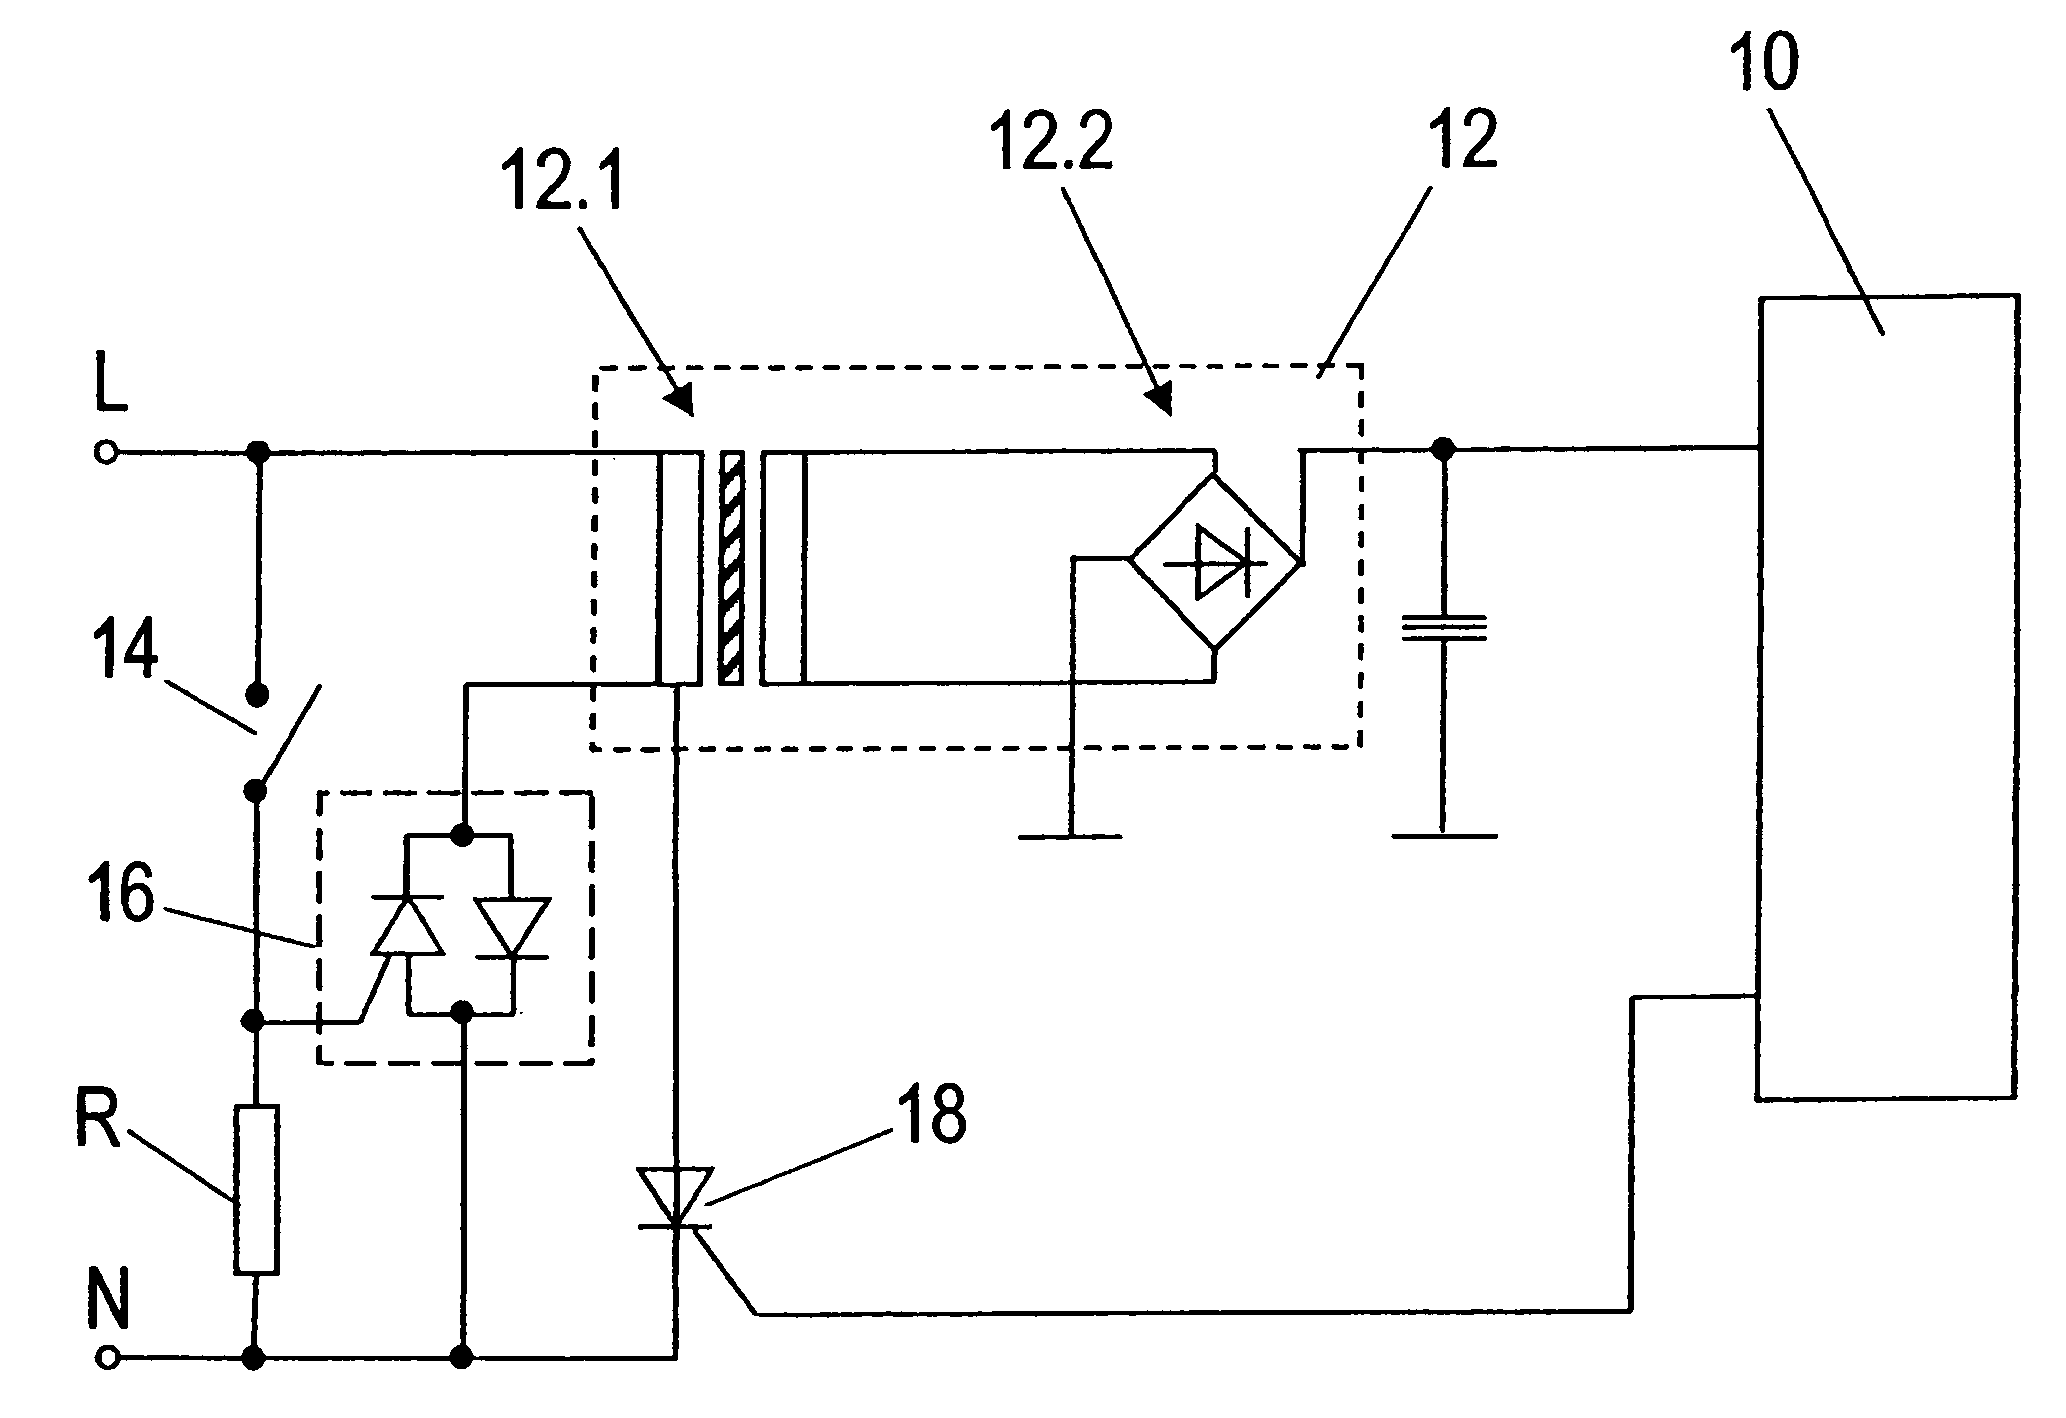 Circuit arrangement for an electric appliance